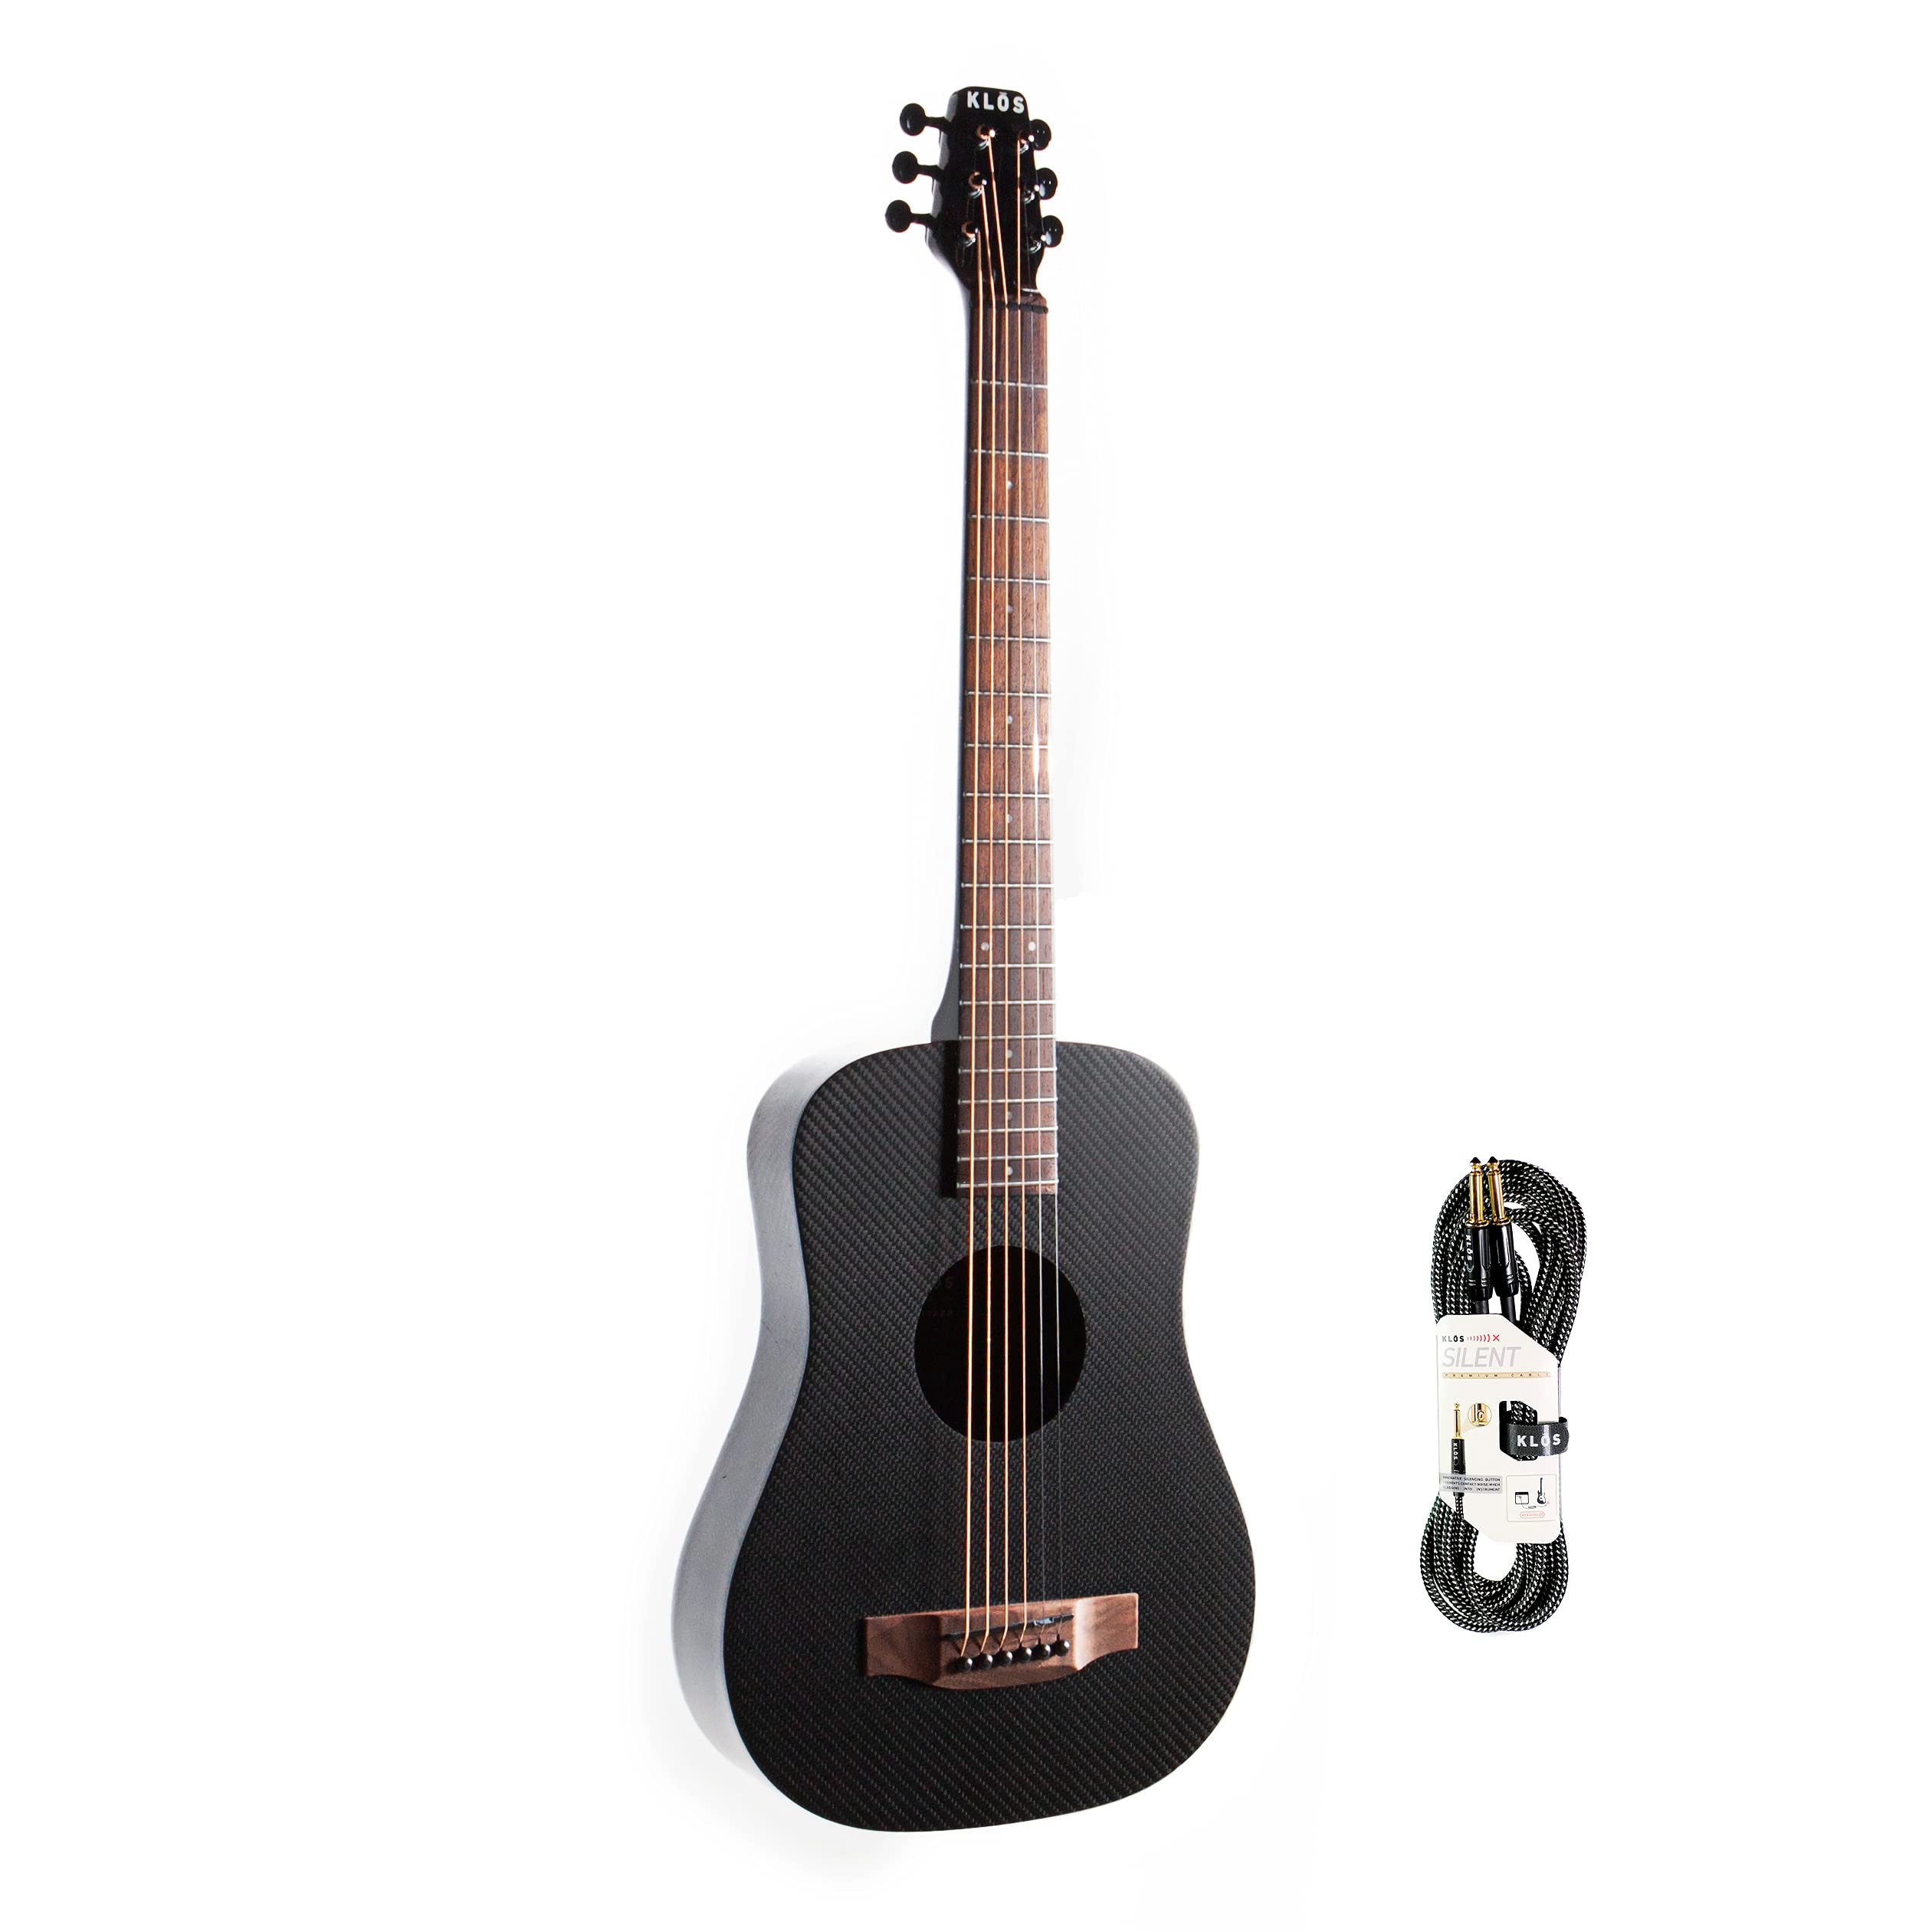 KLŌS 20' Straight to Straight Silent Cable and Black Carbon Fiber Travel Acoustic Guitar Kit Bundle